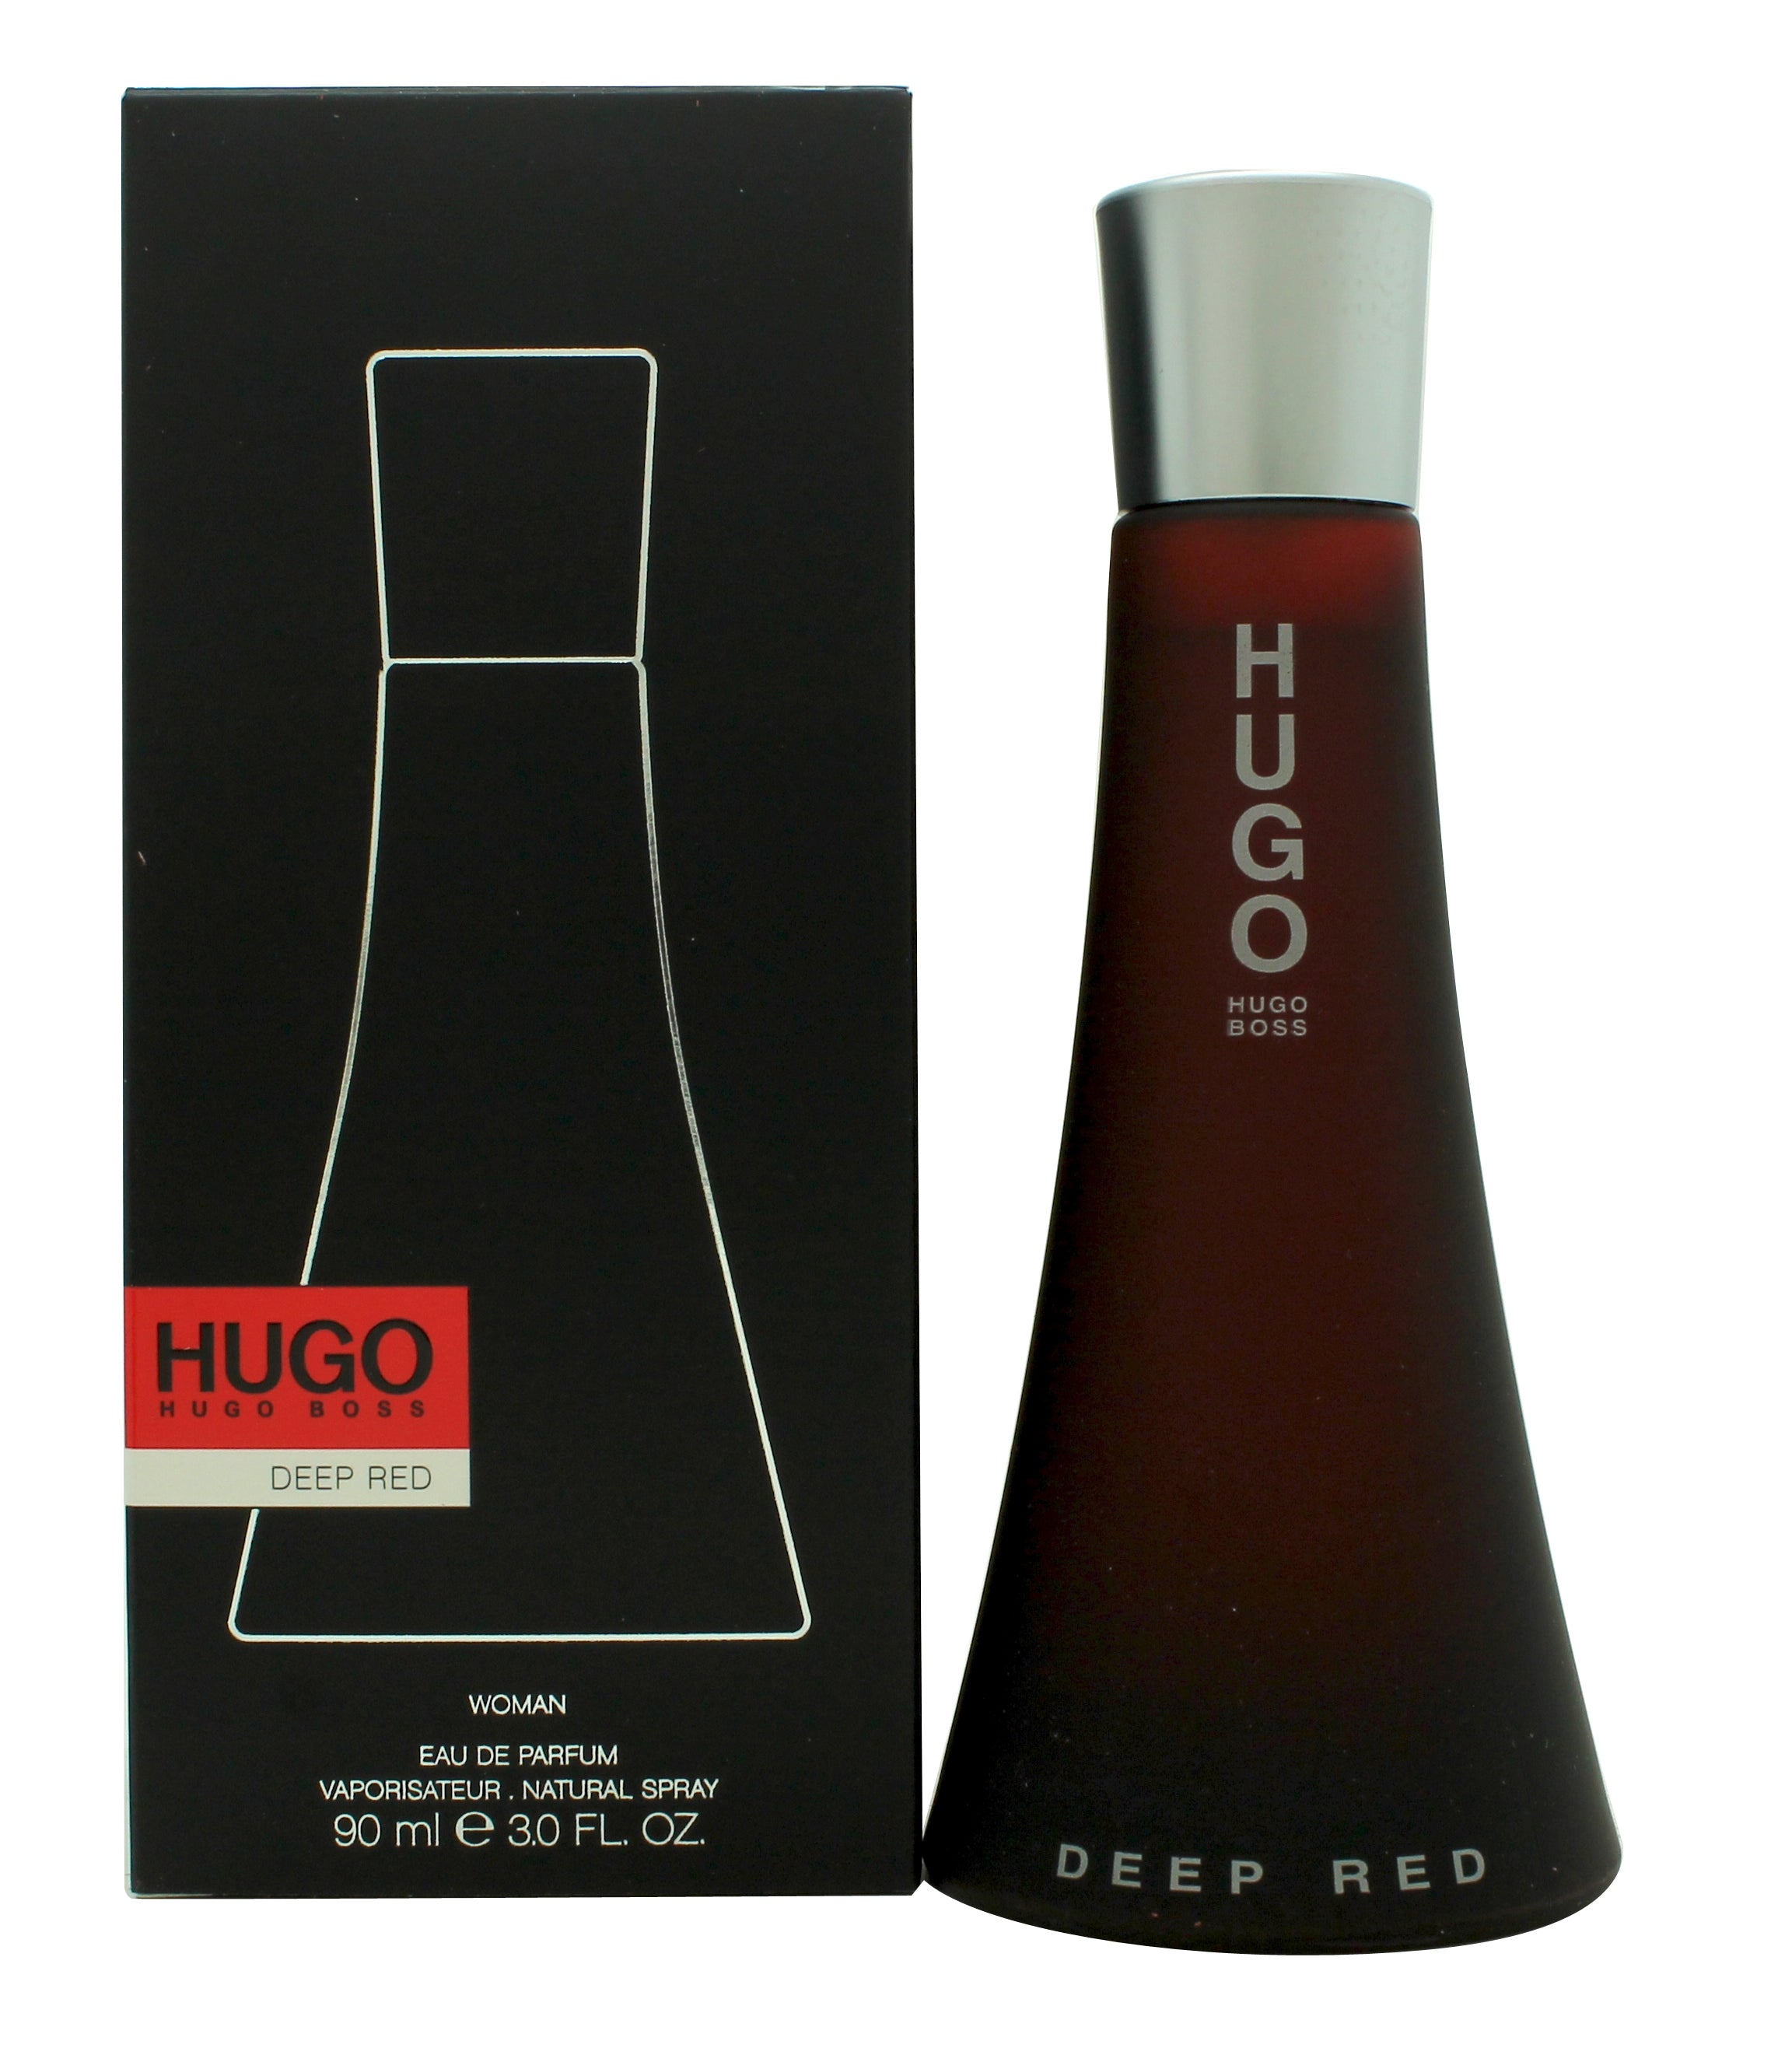 View Hugo Boss Deep Red Eau de Parfum 90ml Spray information